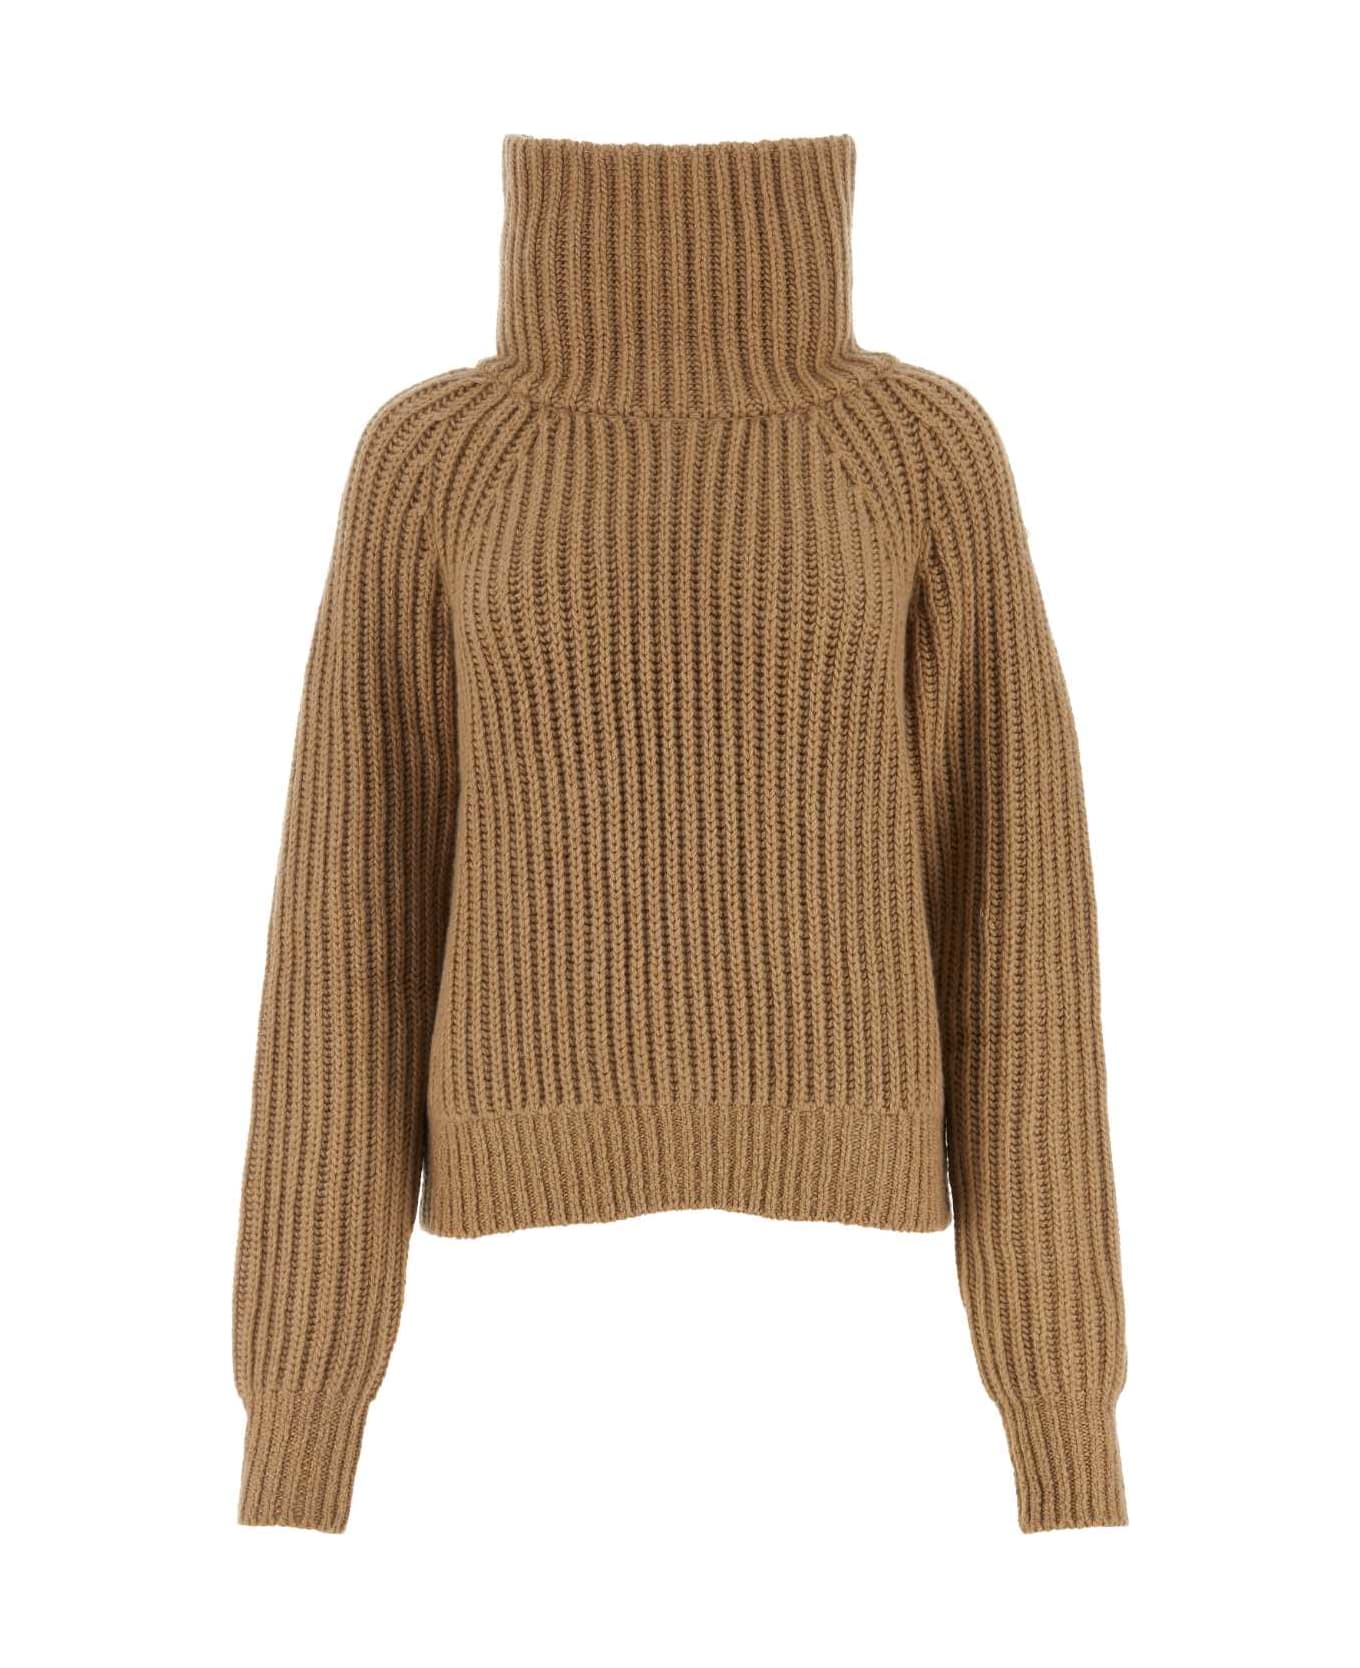 Khaite Camel Cashmere Sweater - CAMEL